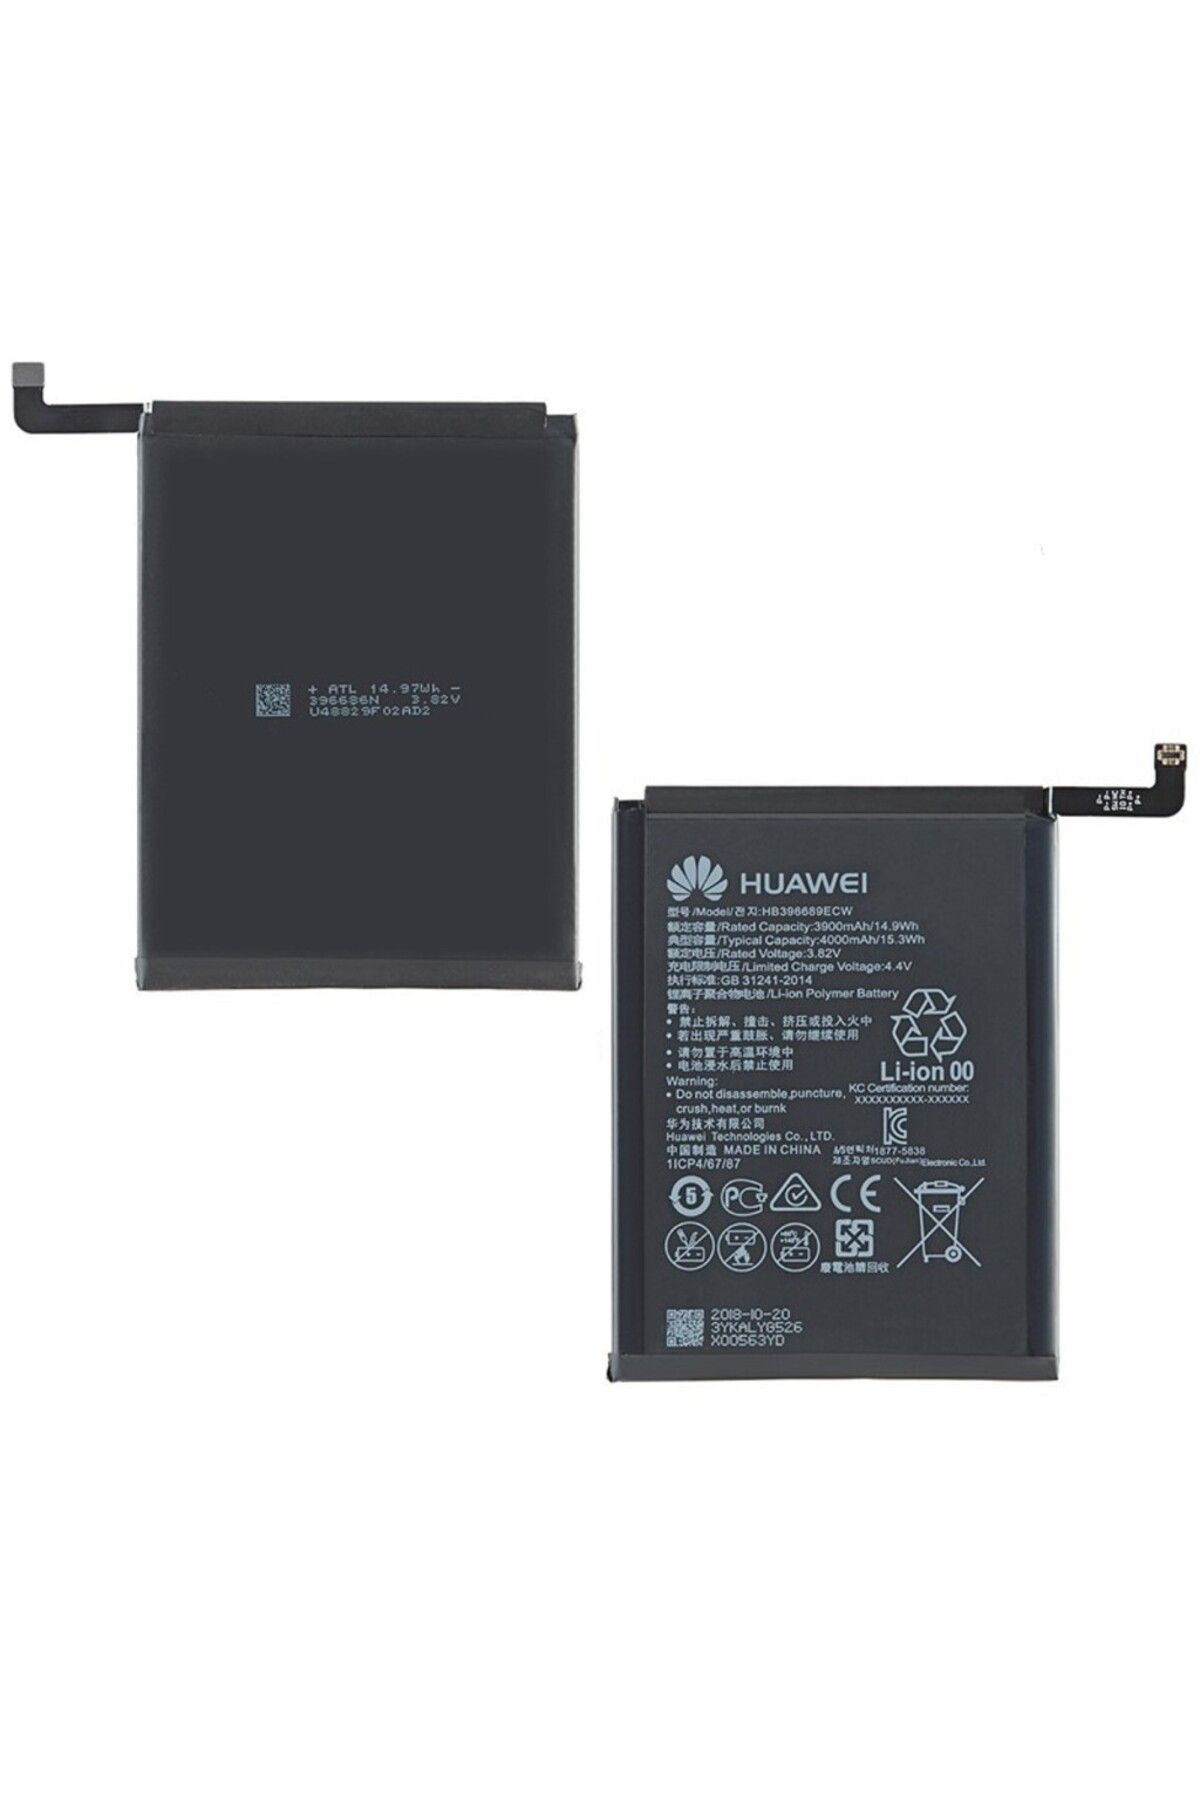 Honor Huawei Honor 8C Hb396689Ecw Pil Batarya